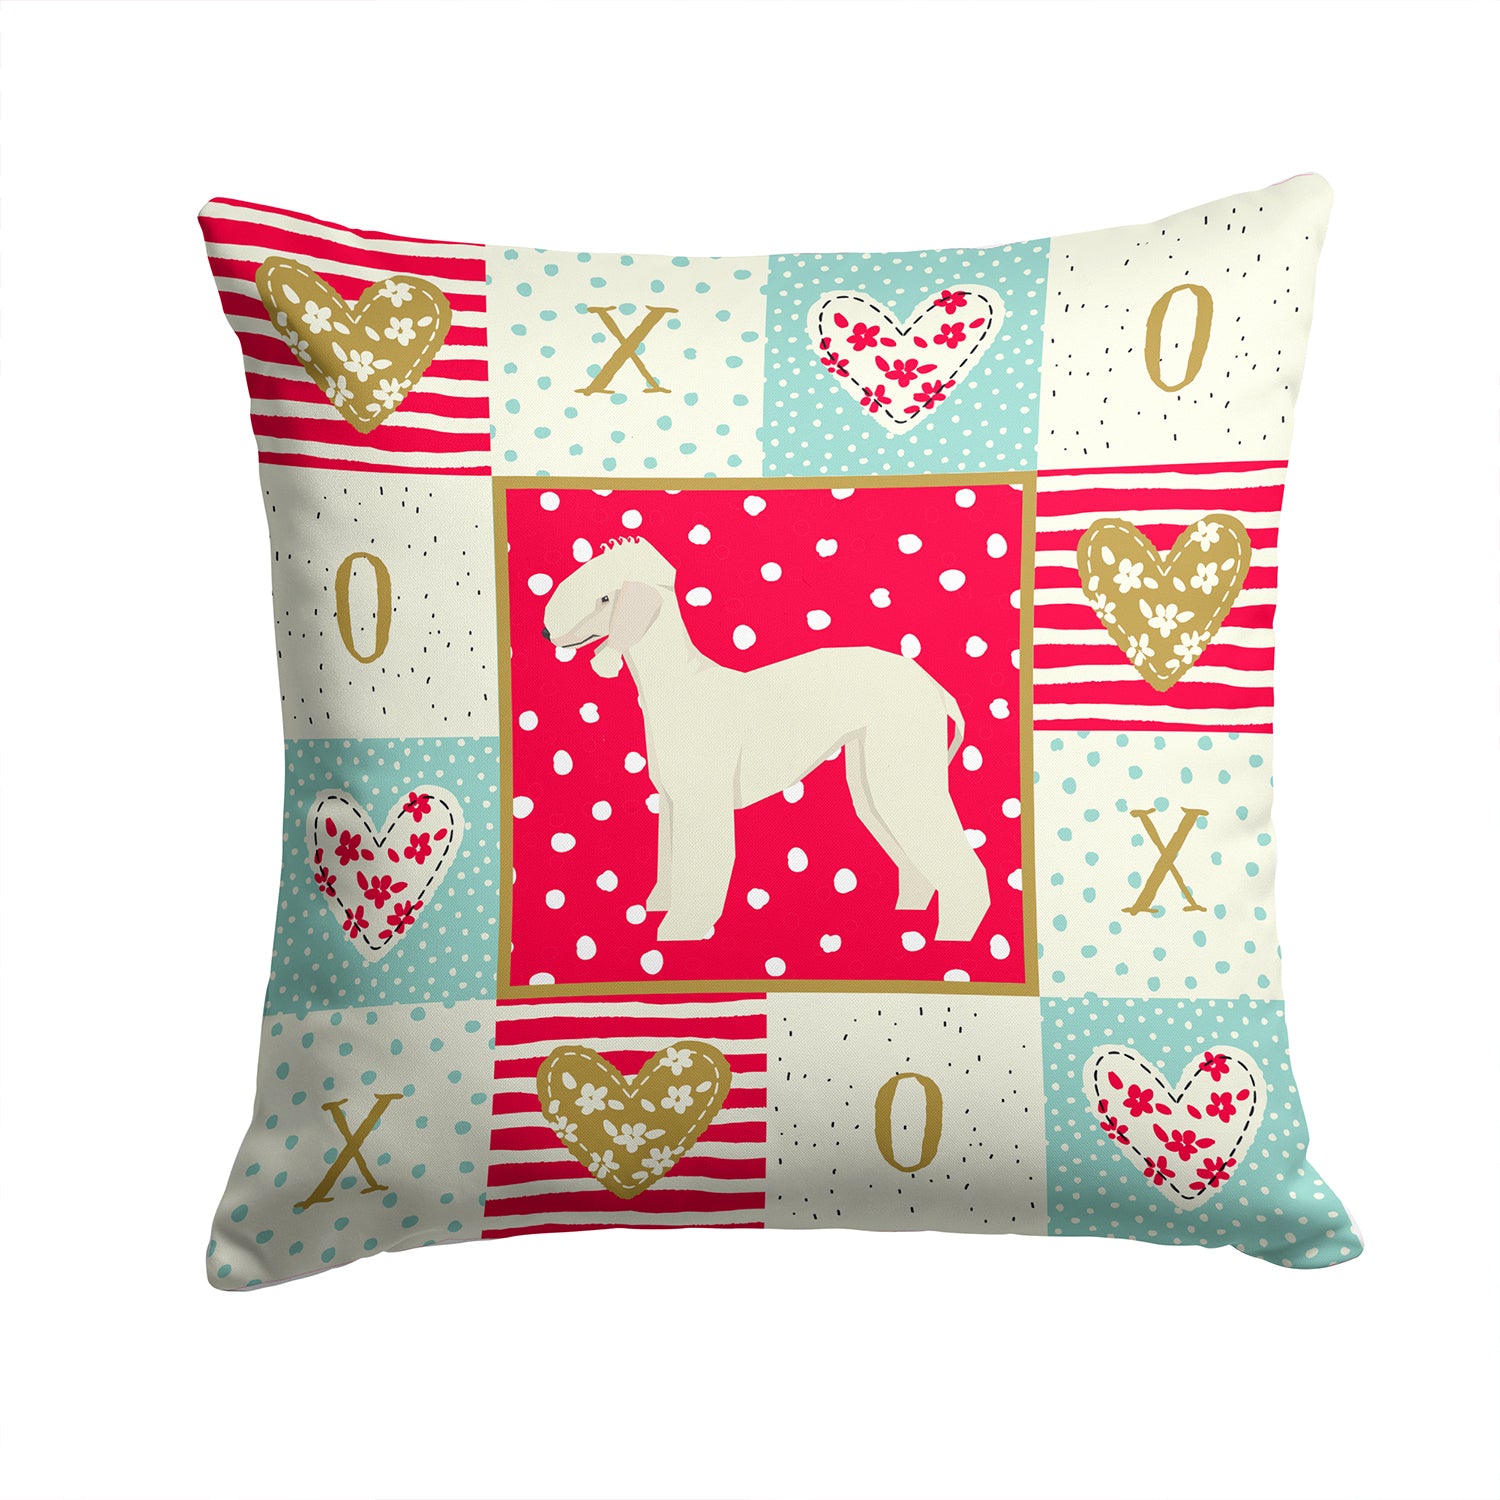 Bedlington Terrier Love Fabric Decorative Pillow CK5910PW1414 - the-store.com